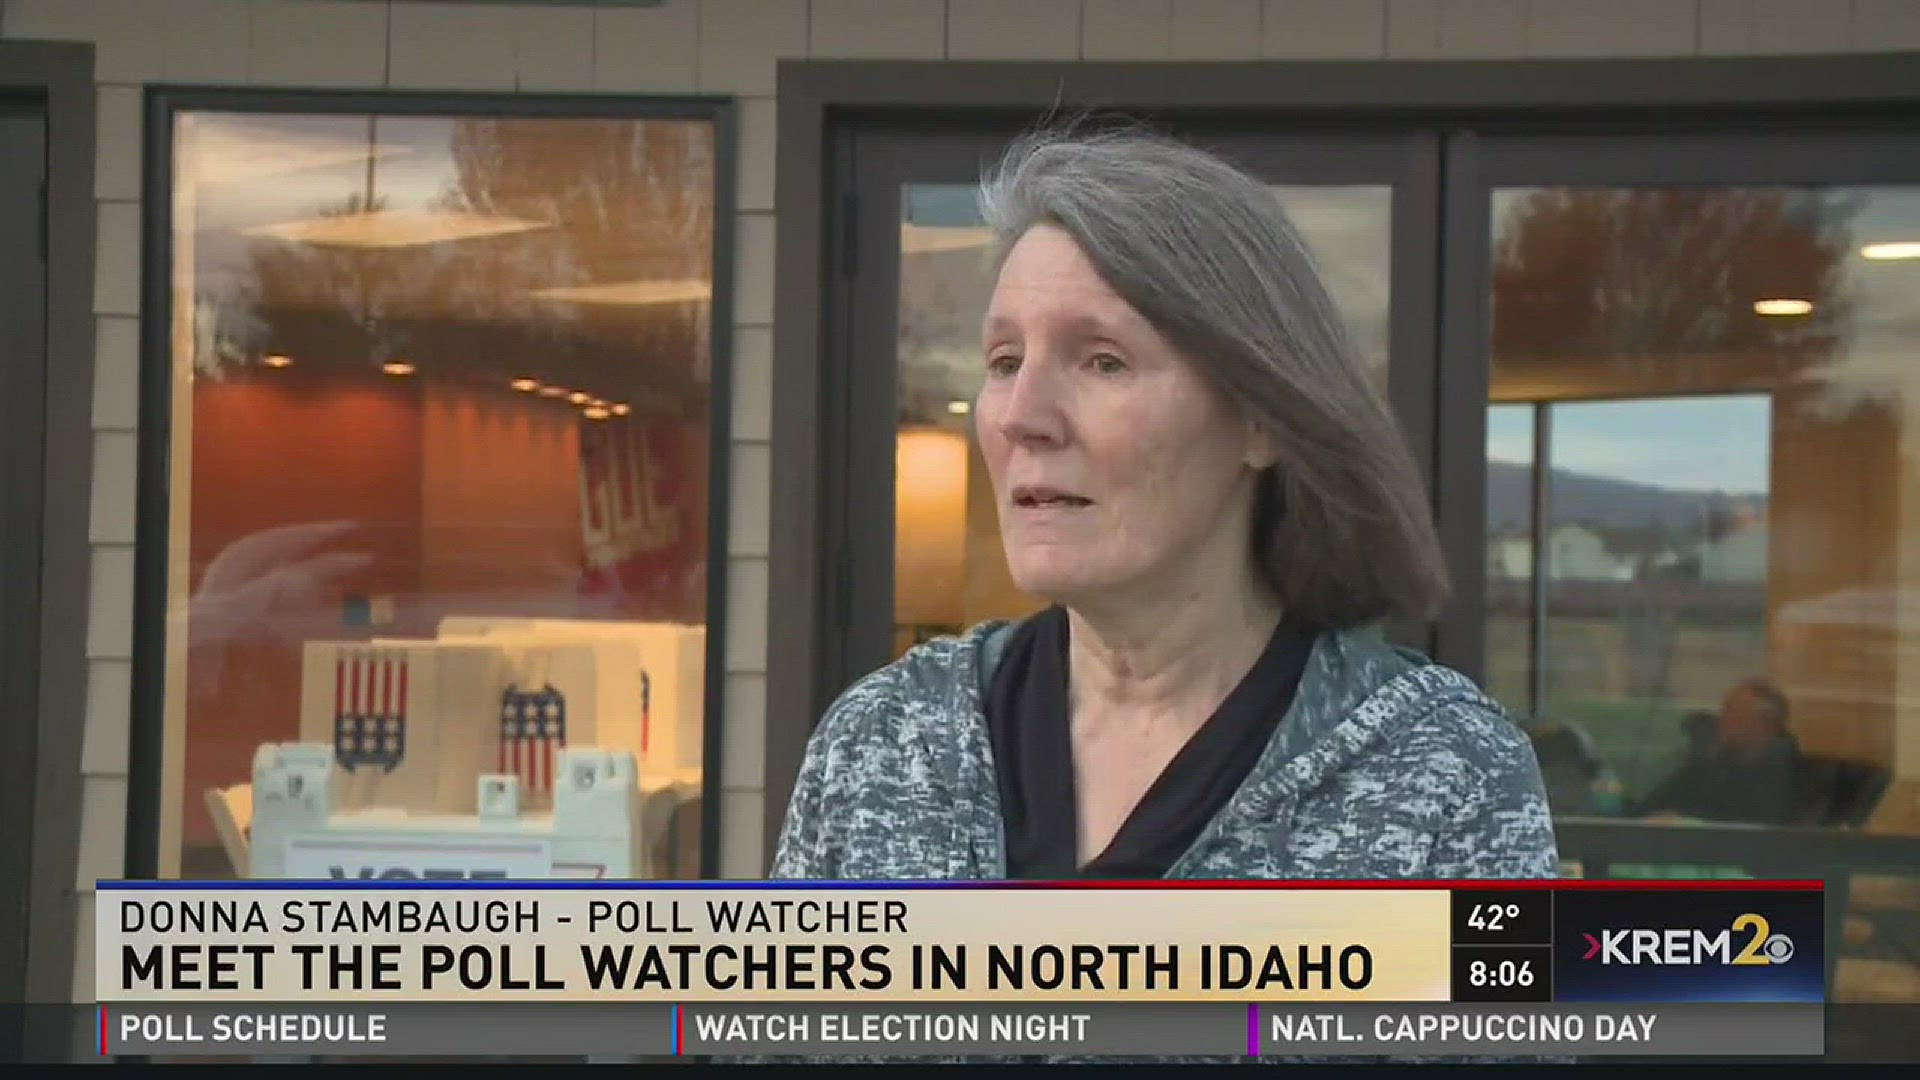 Meet the poll watchers in North Idaho